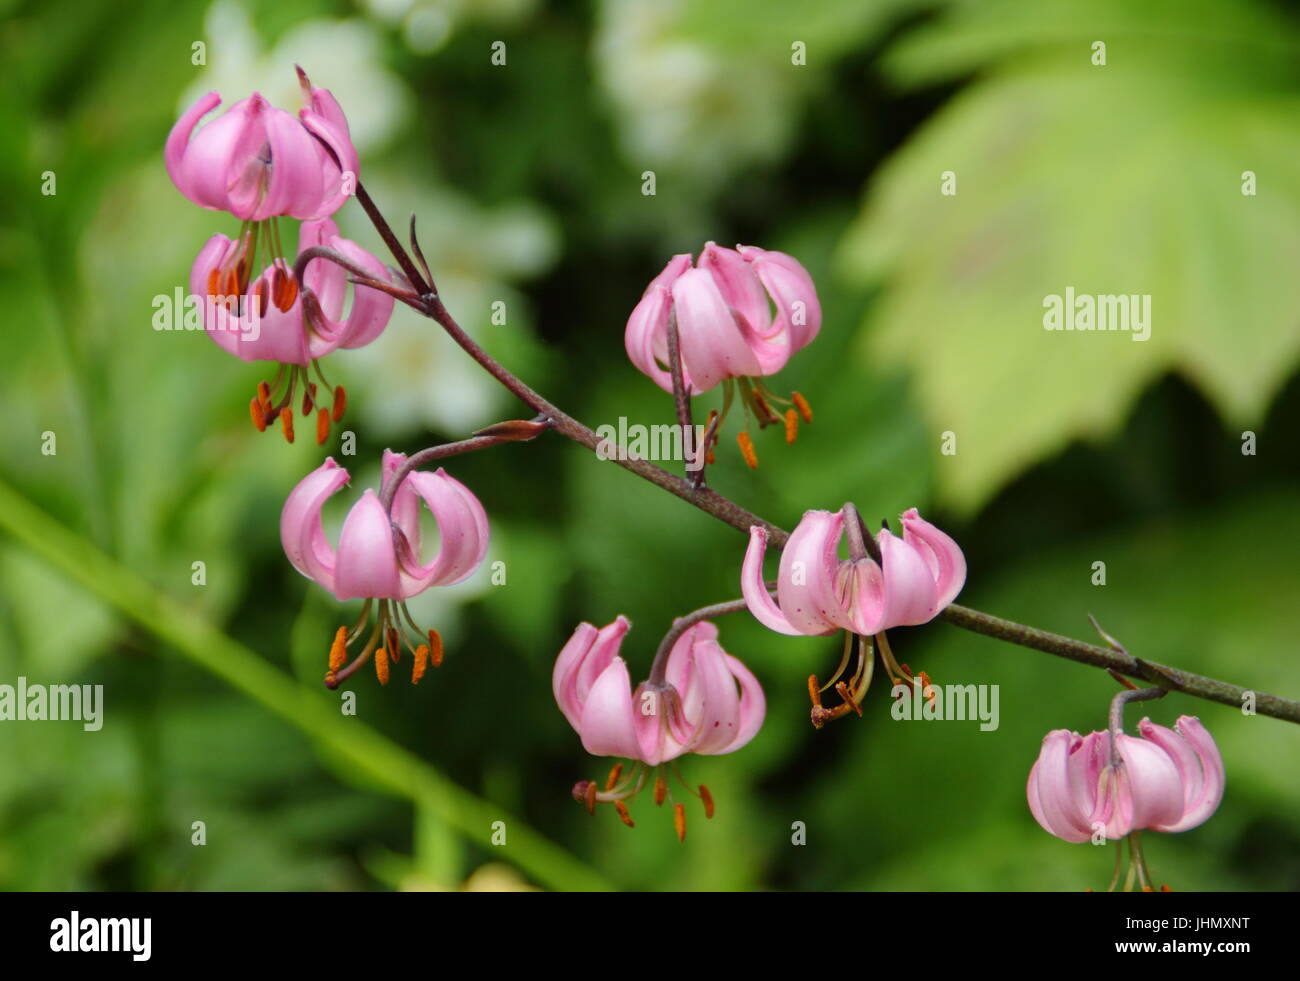 Lilium martagon - Turk's Cap Lily - in full bloom in an English garden in summer Stock Photo